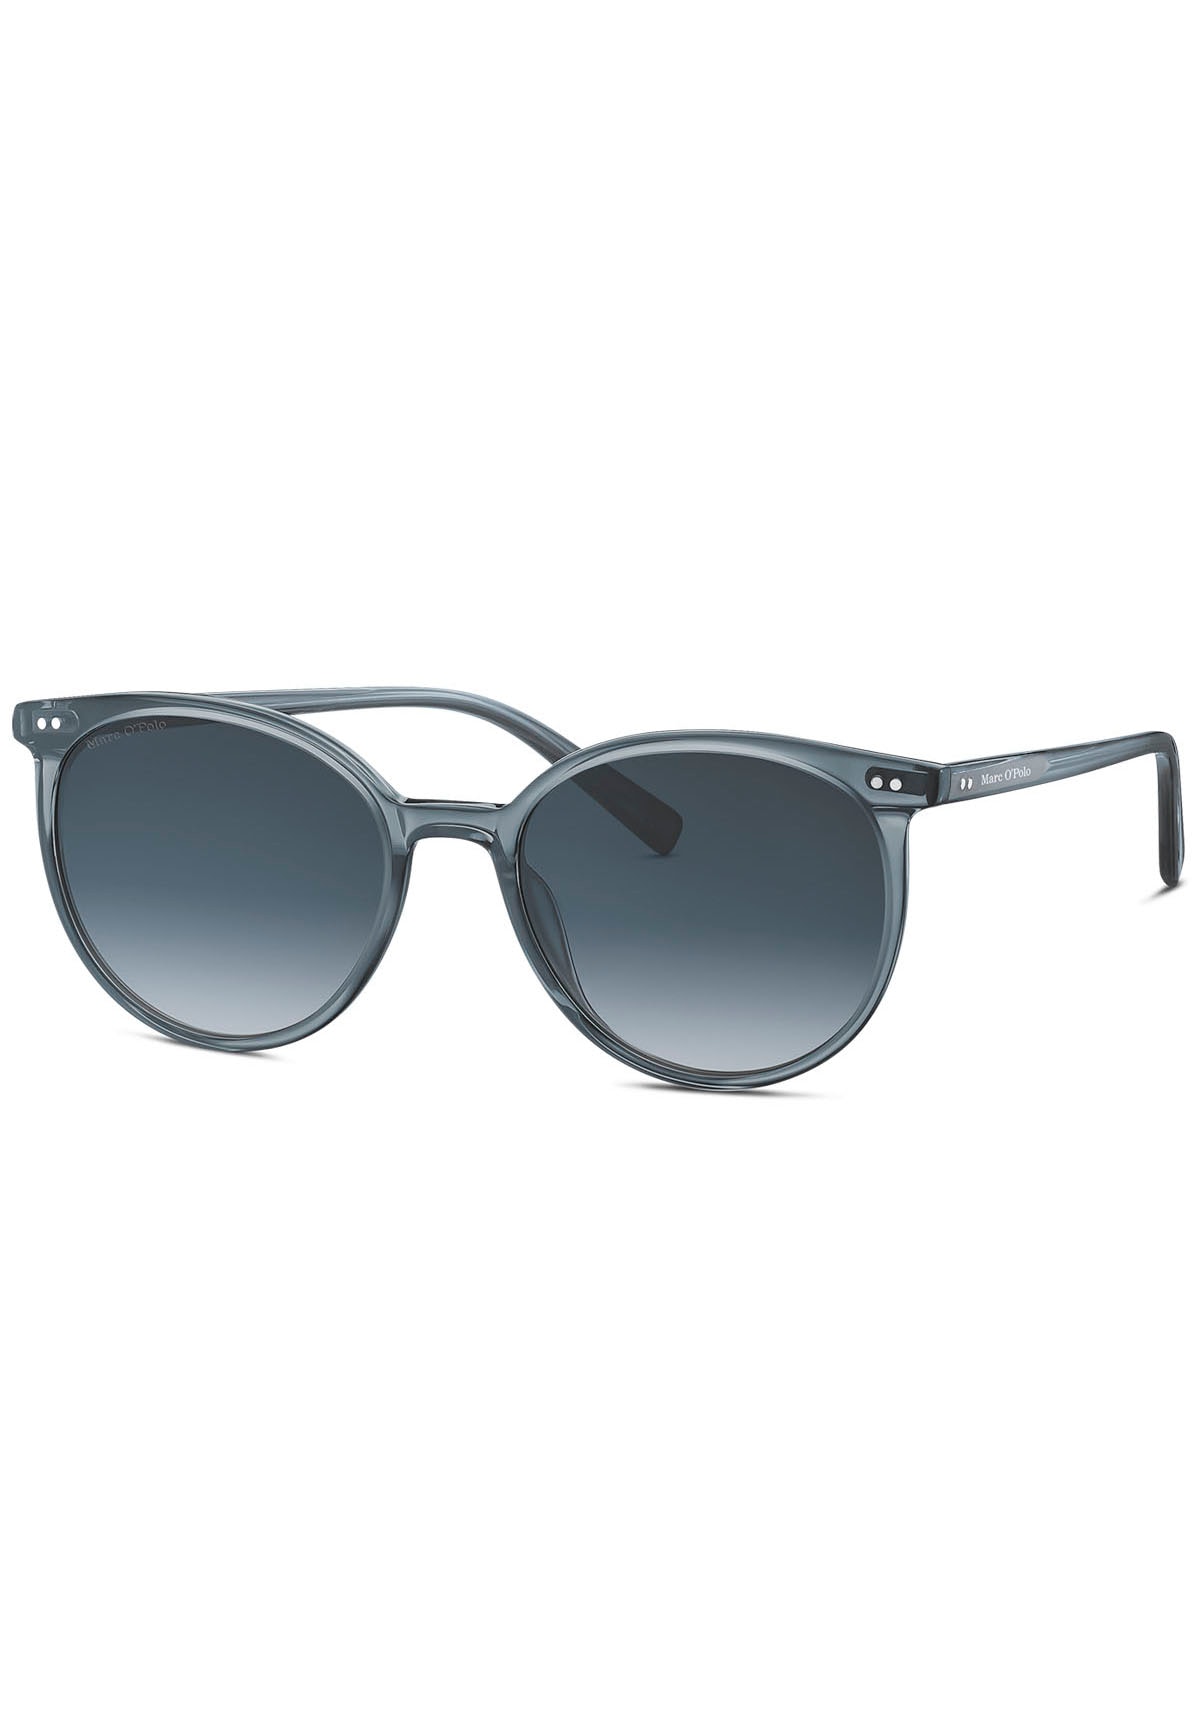 Marc O'Polo Sonnenbrille »Modell 506164«, Panto-Form